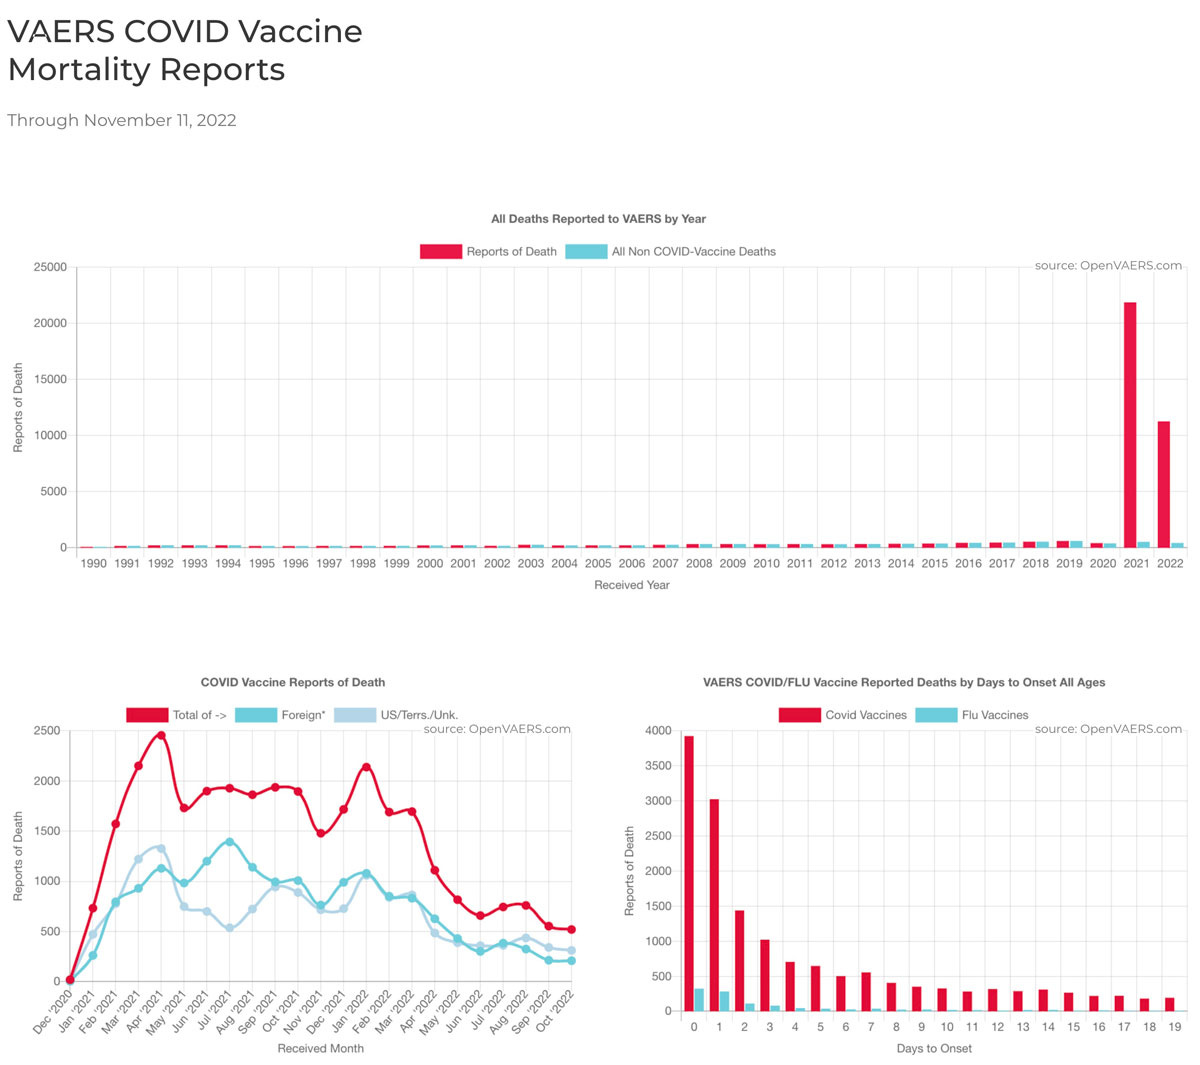 VAERS COVID Vaccine Mortality Reports Through November 11, 2022